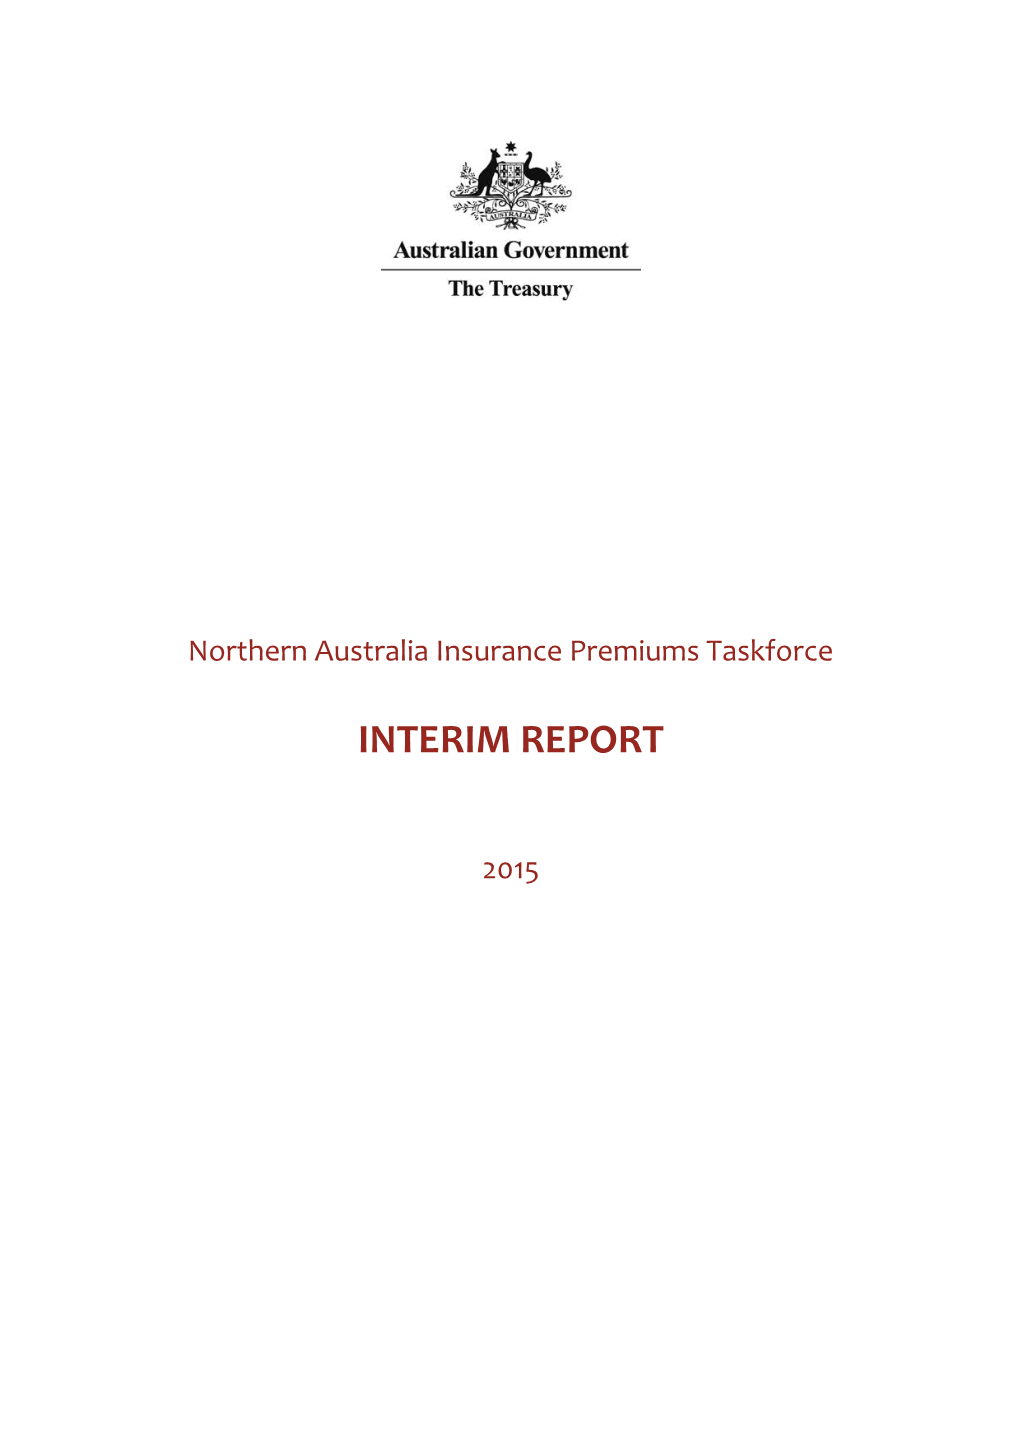 Interim Report: Review of Northern Australian Insurance Premiums